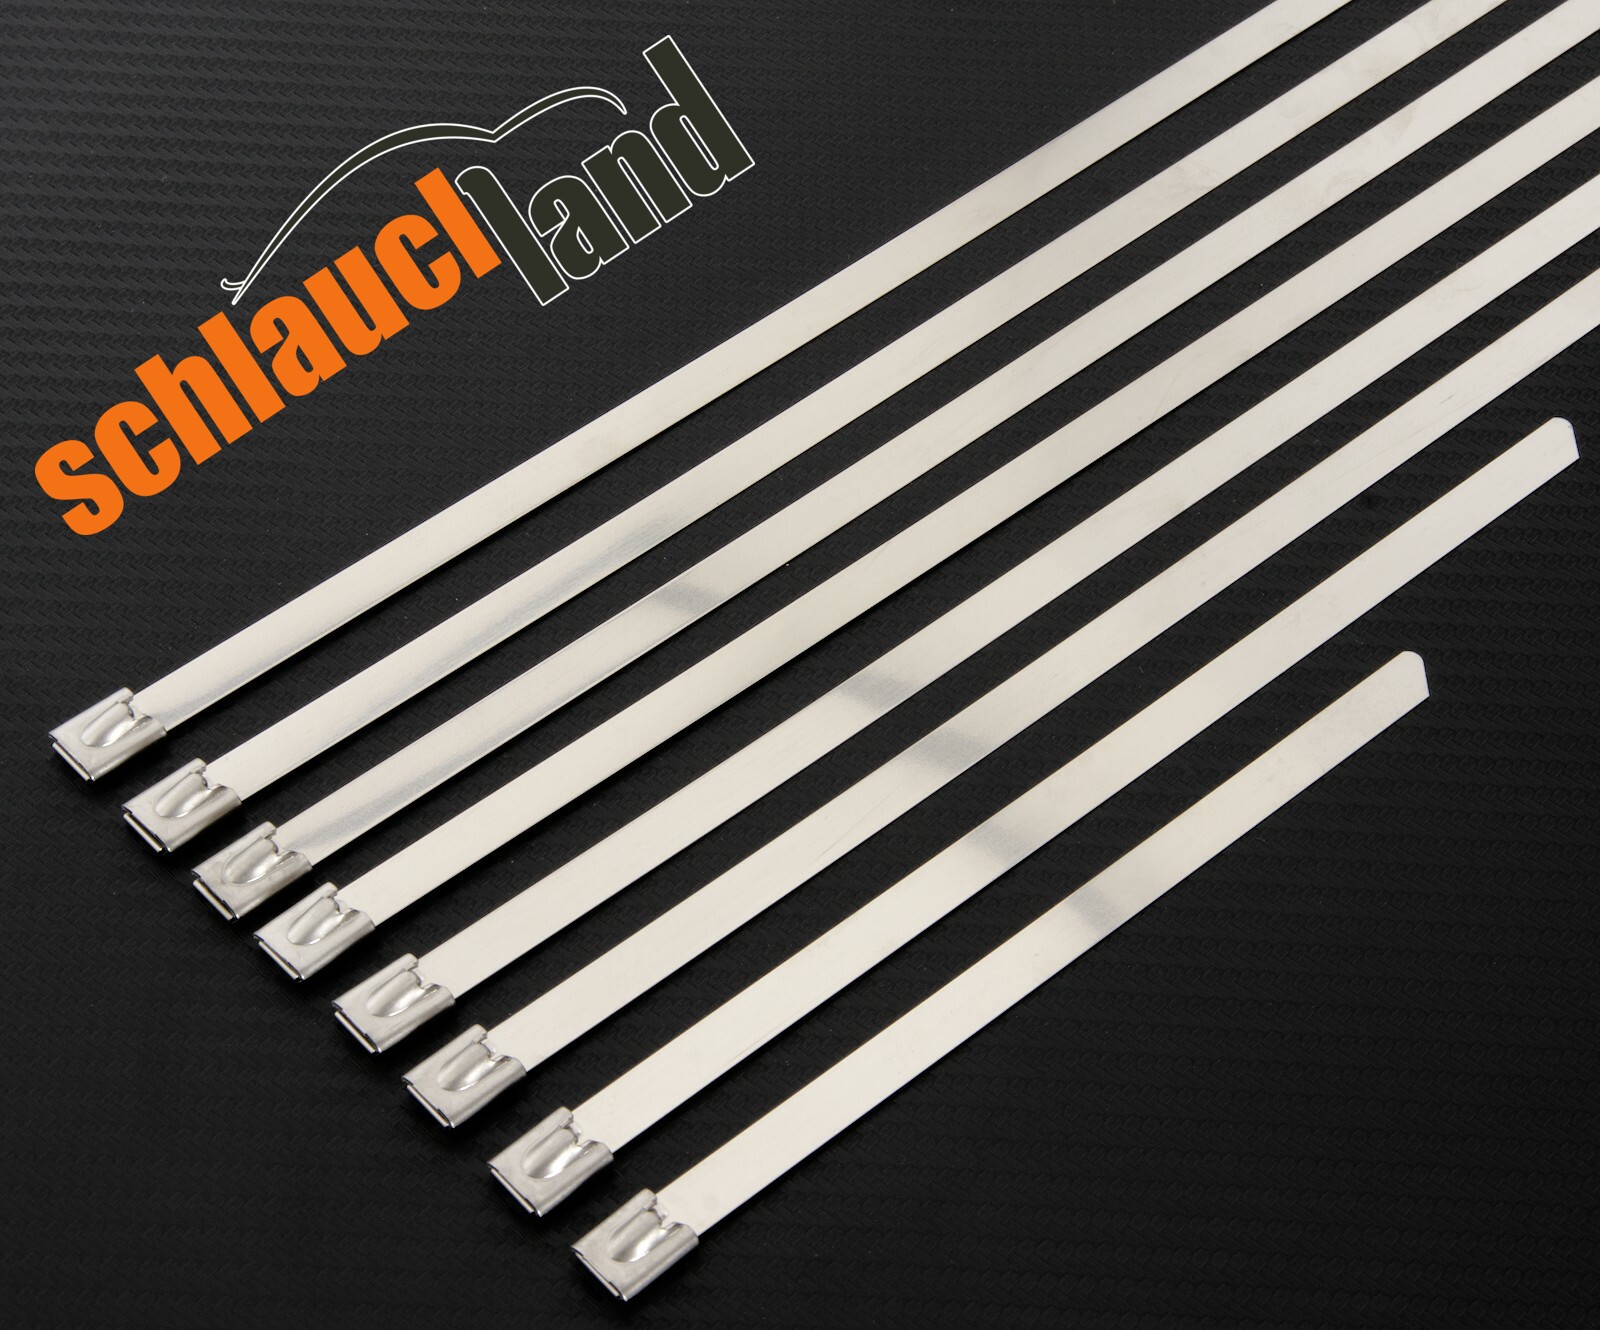 10x Edelstahl Kabelbinder Kabel Band Stainless Steel Cable Zip Ties 20cmx4,6mm